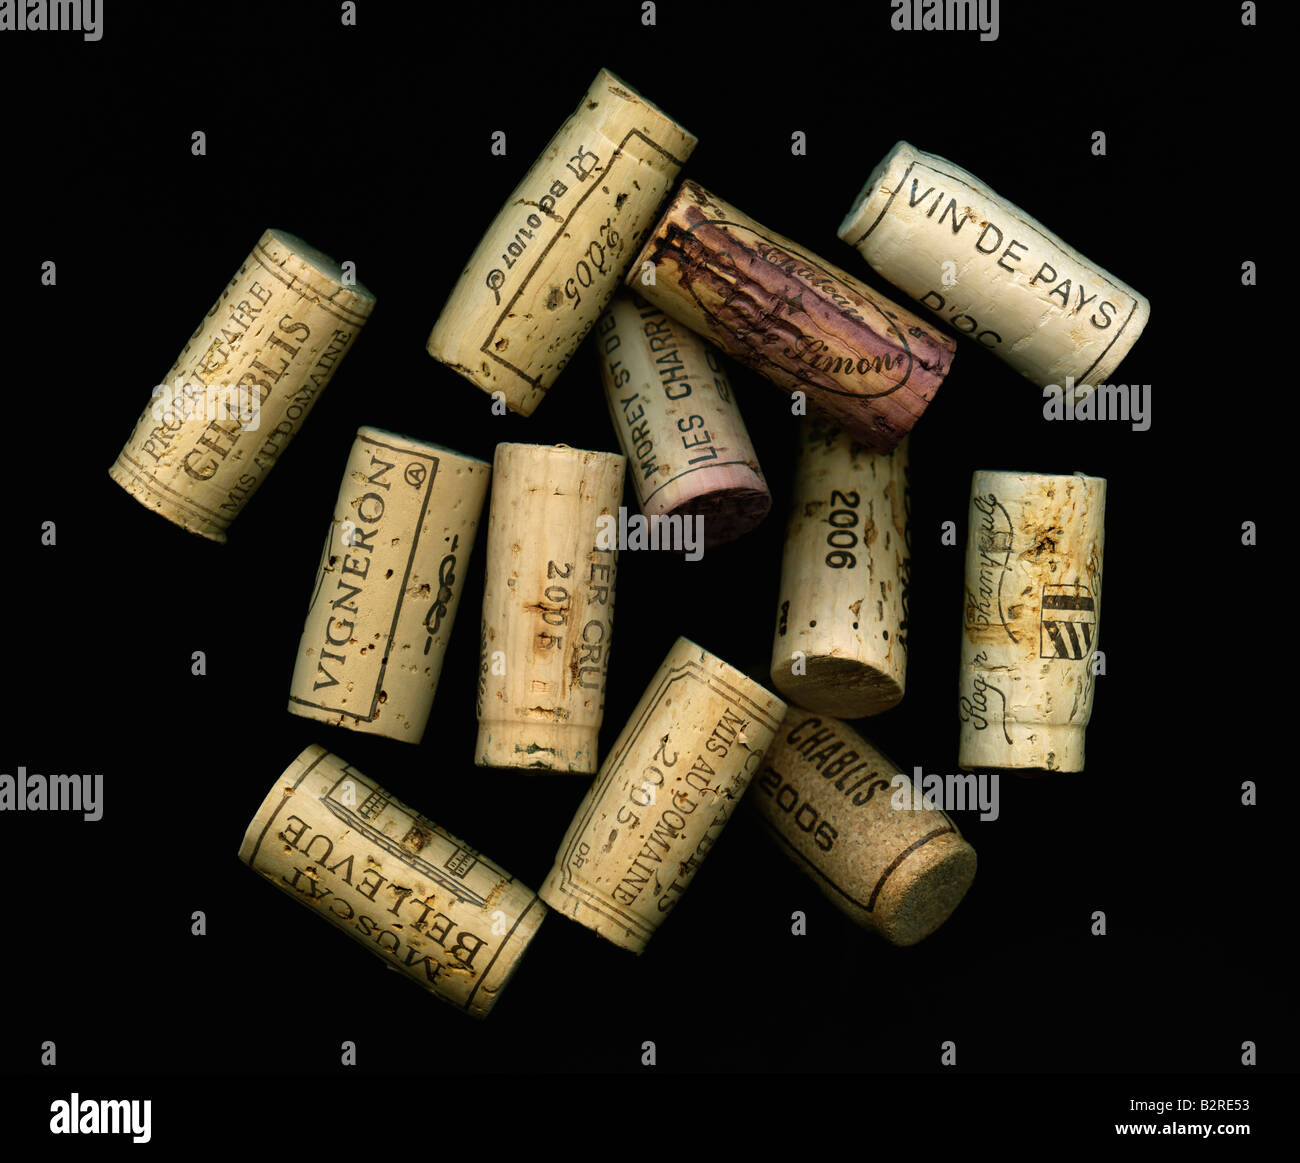 selection of Fine wine corks Stock Photo